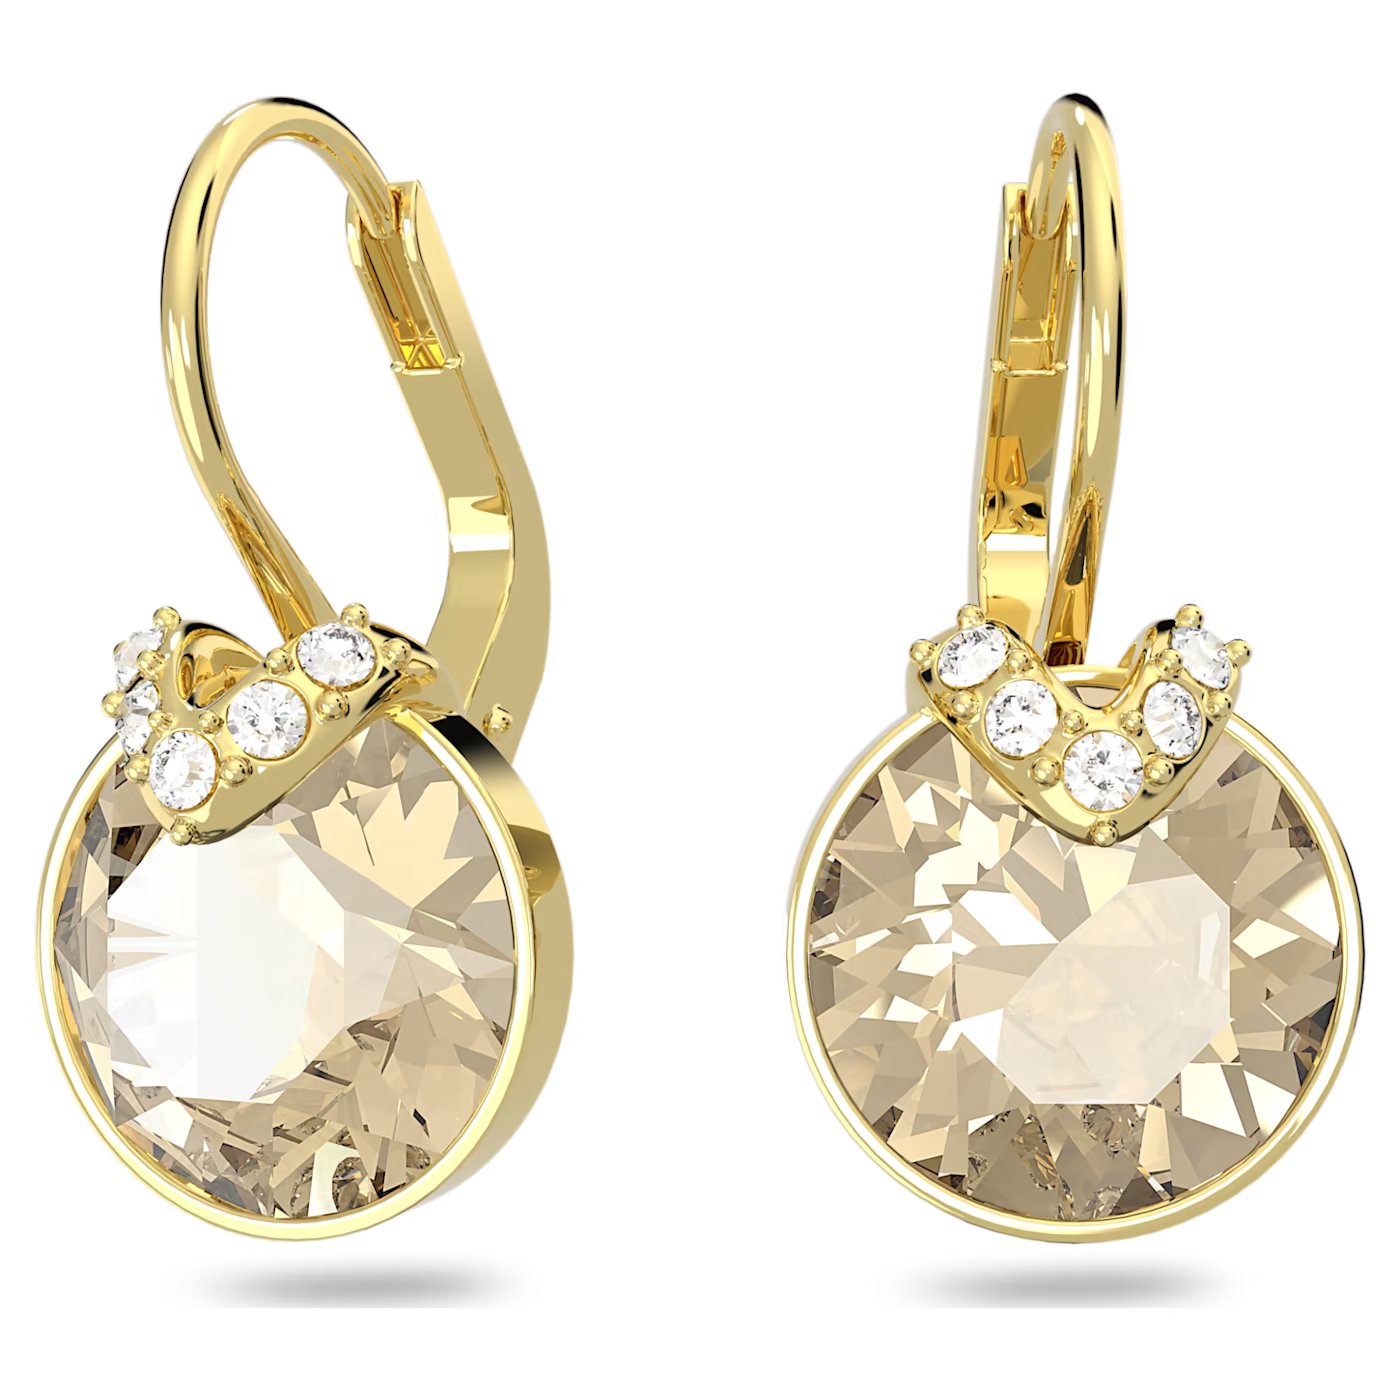 63ca94a8aac8a_bella-v-drop-earrings--round-cut--gold-tone--gold-tone-plated-swarovski-5662093.jpg